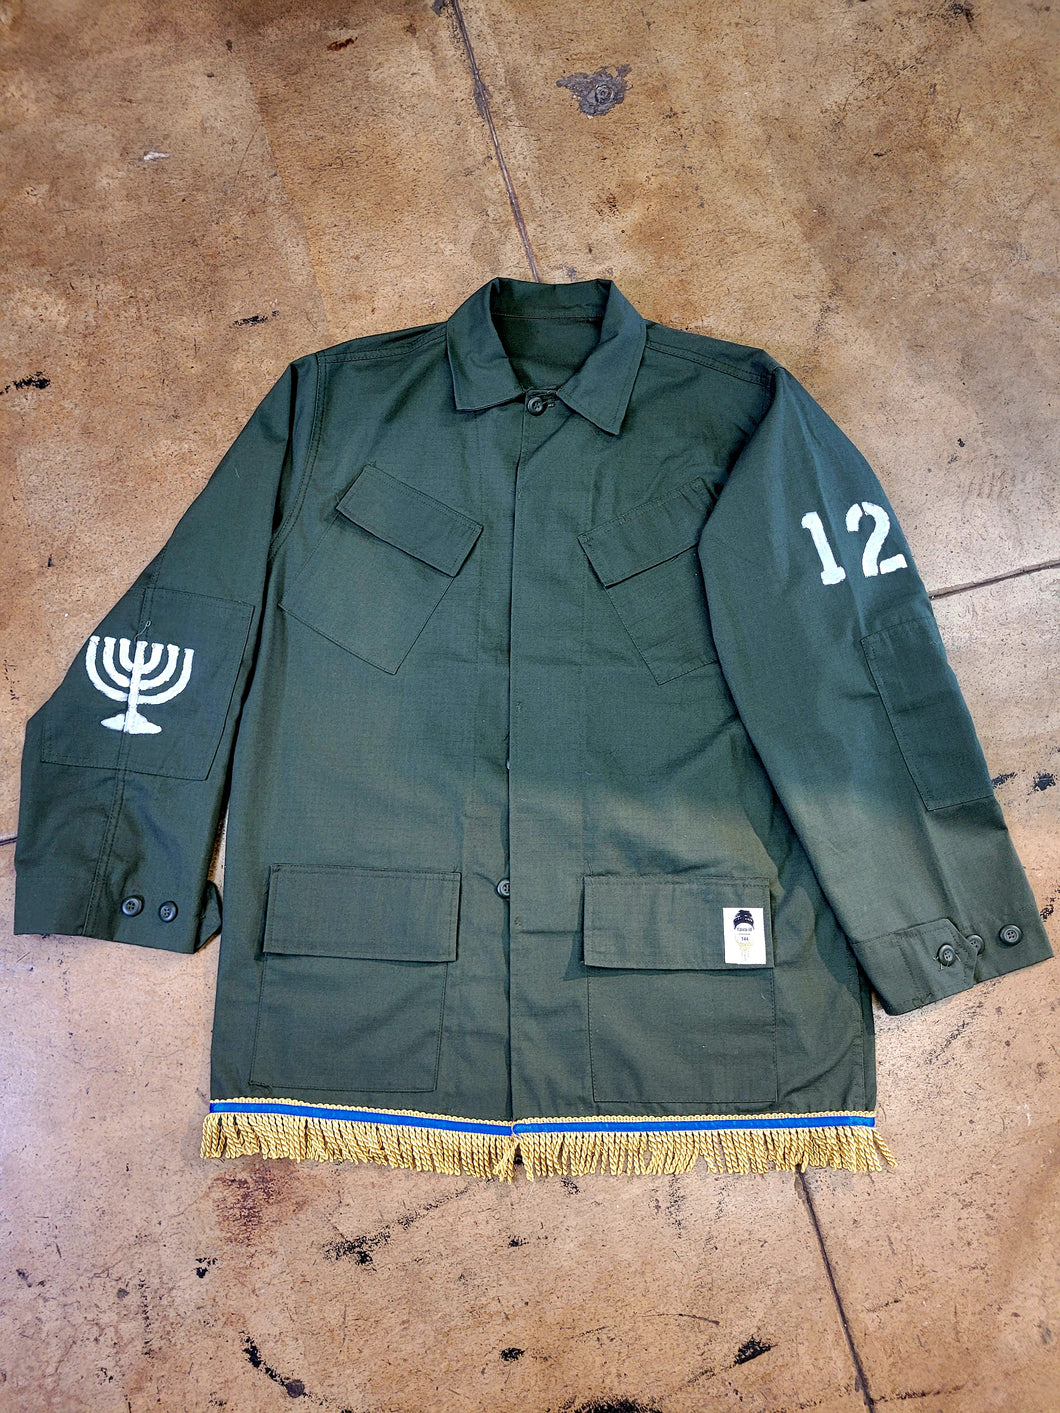 Hebrew soldier jackets